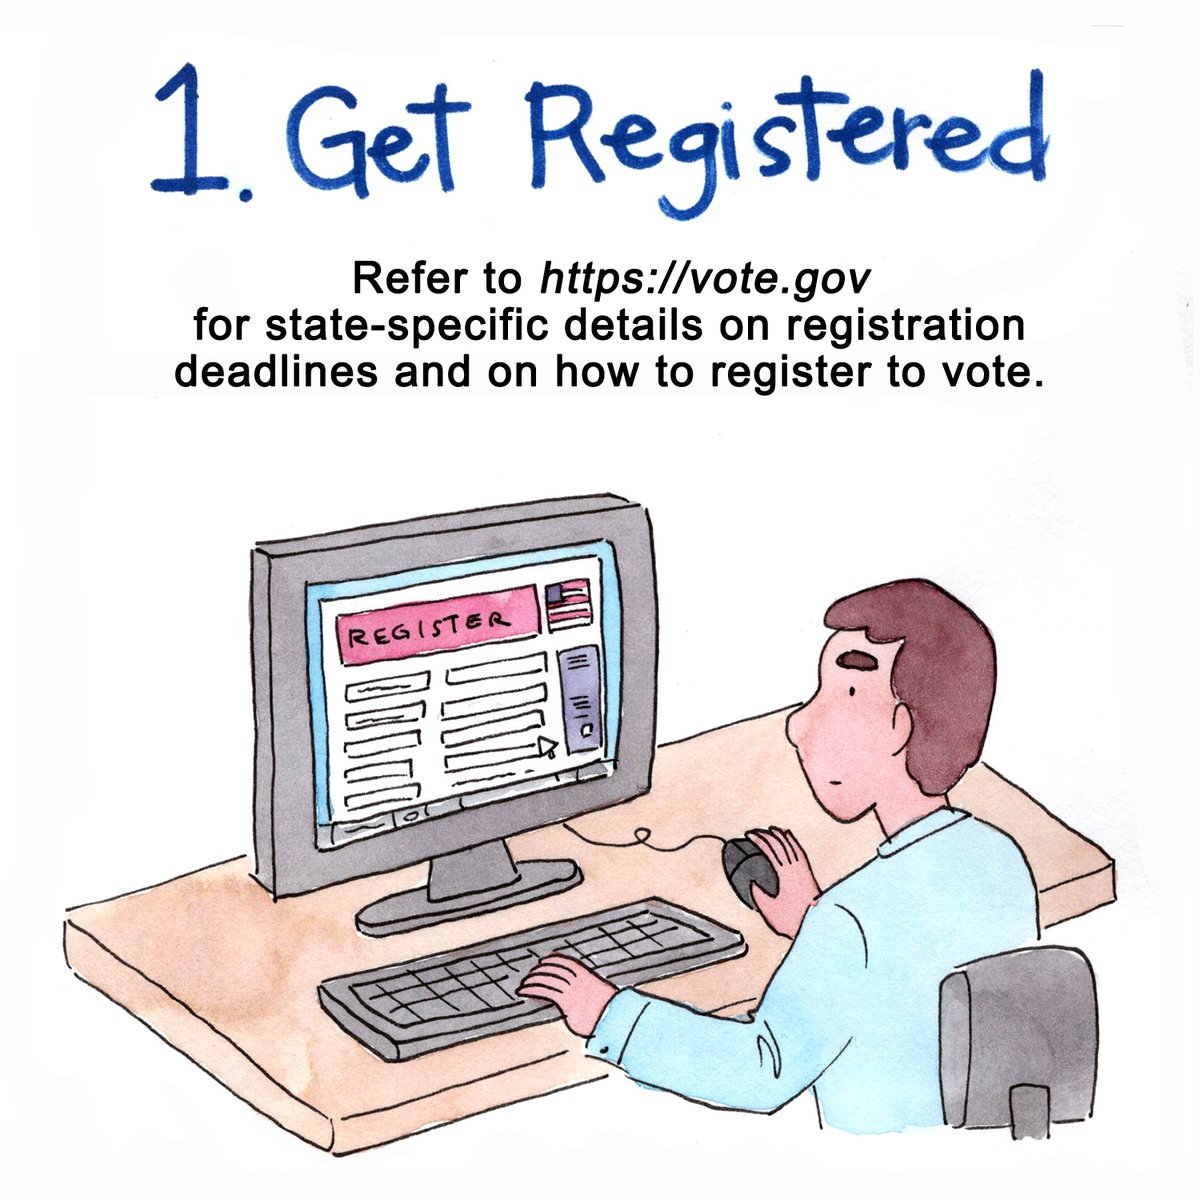 1. GET REGISTEREDRefer to  https://vote.gov/  for state-specific details on registration deadlines and on how to register to vote. (4/10)